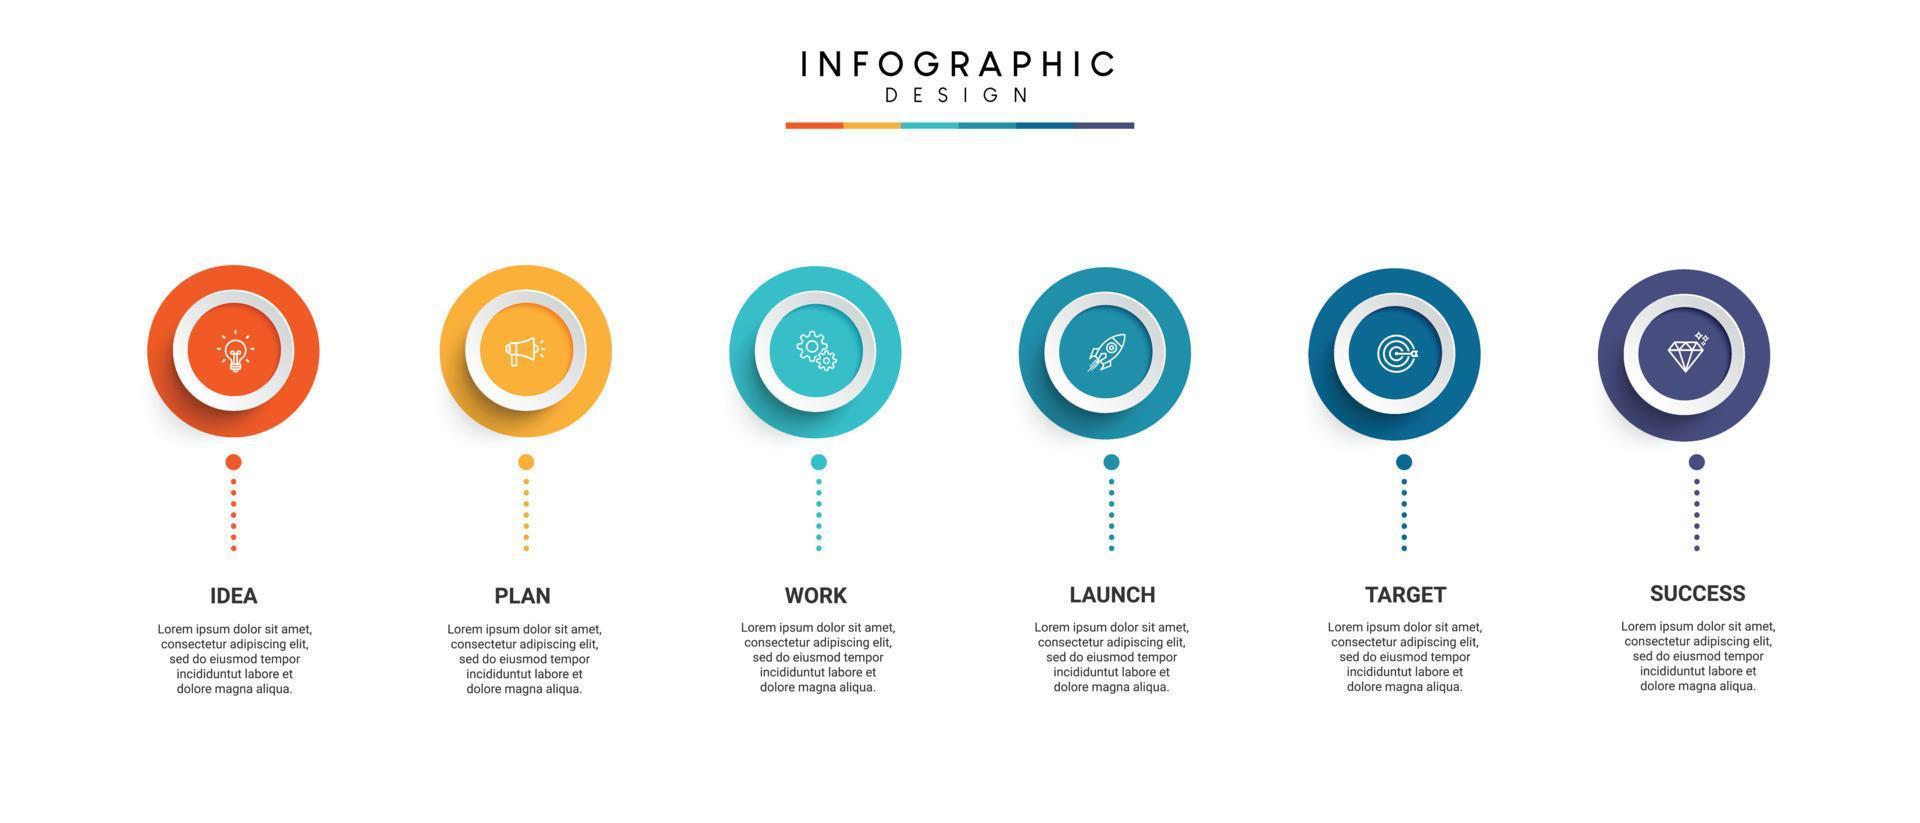 design process infographic